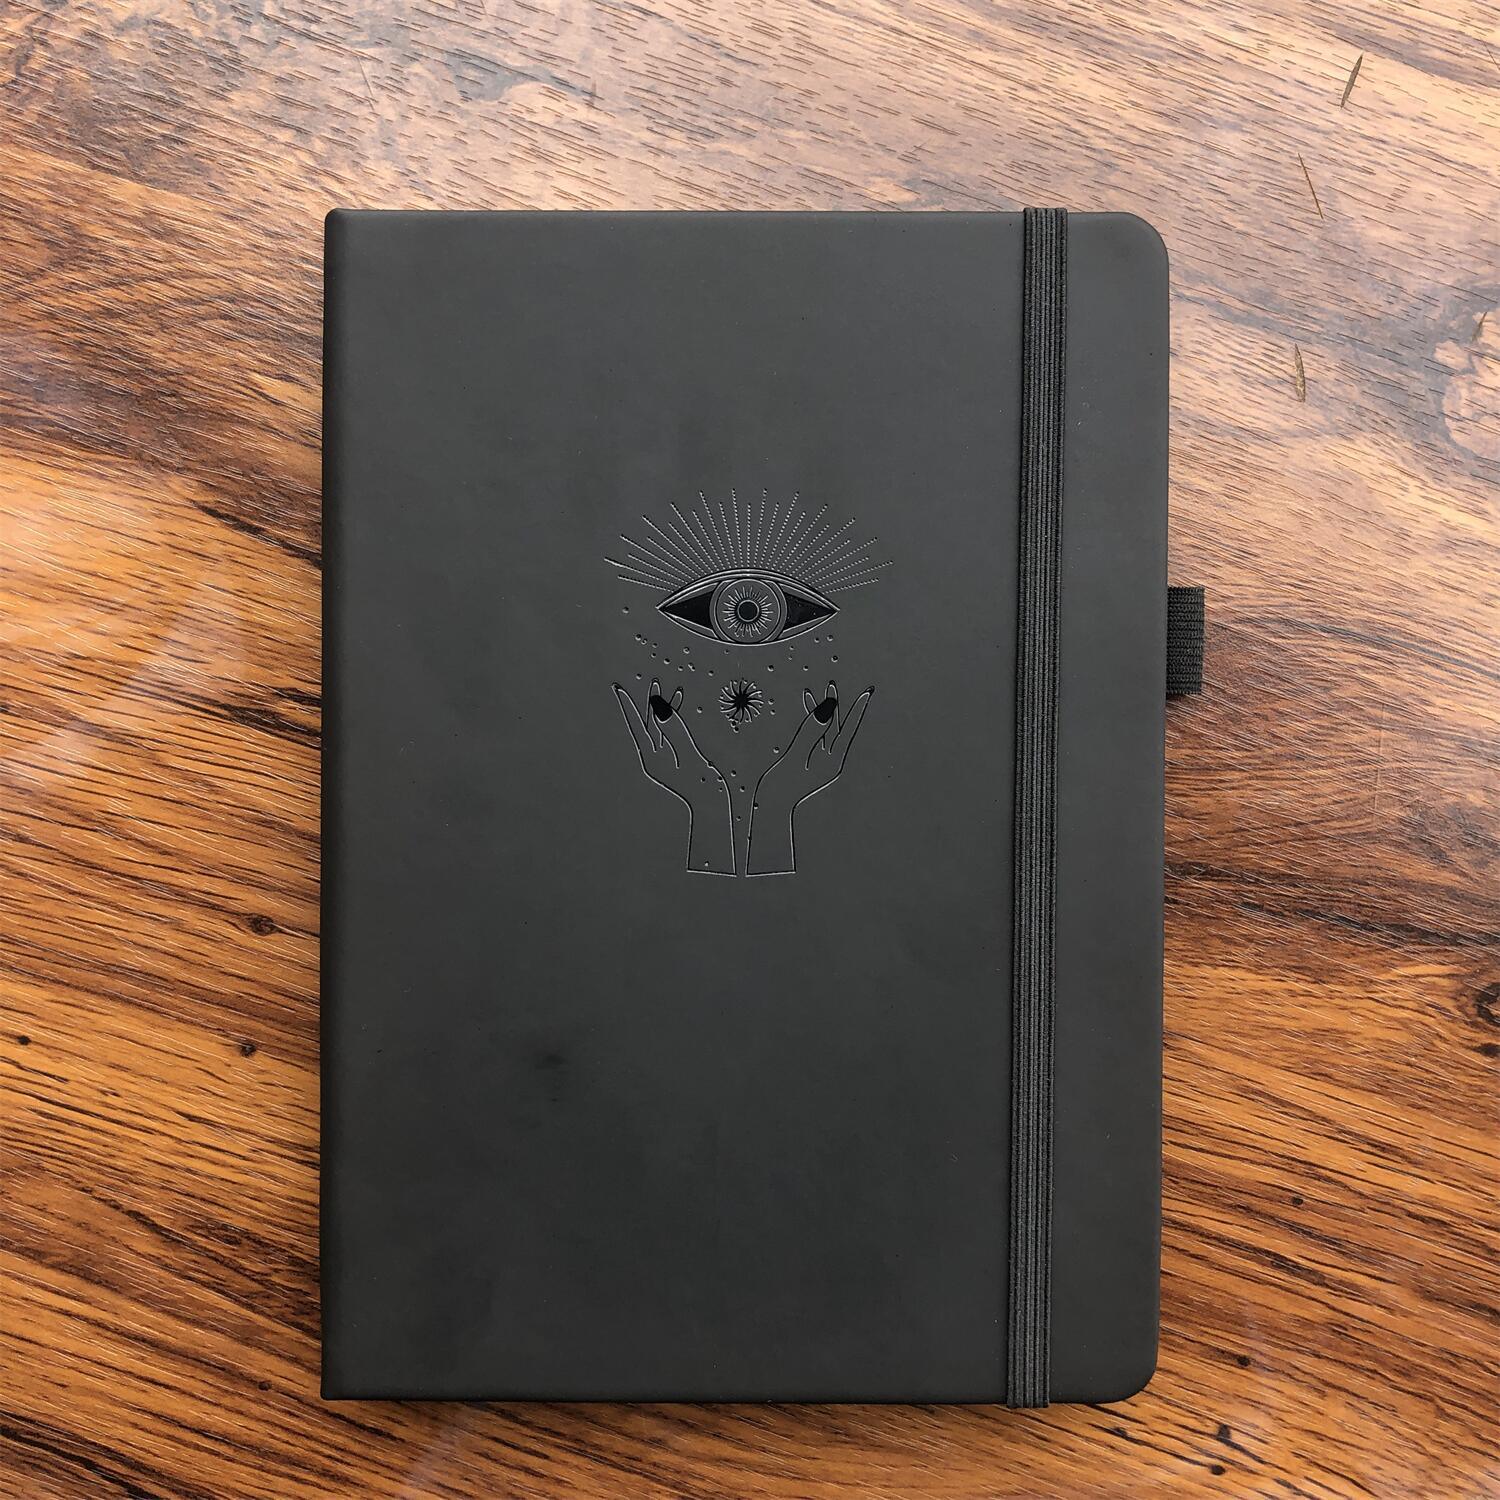 A5 Black Paper Mystical Bottle Bullet Dotted Journal Dot Grid Notebook